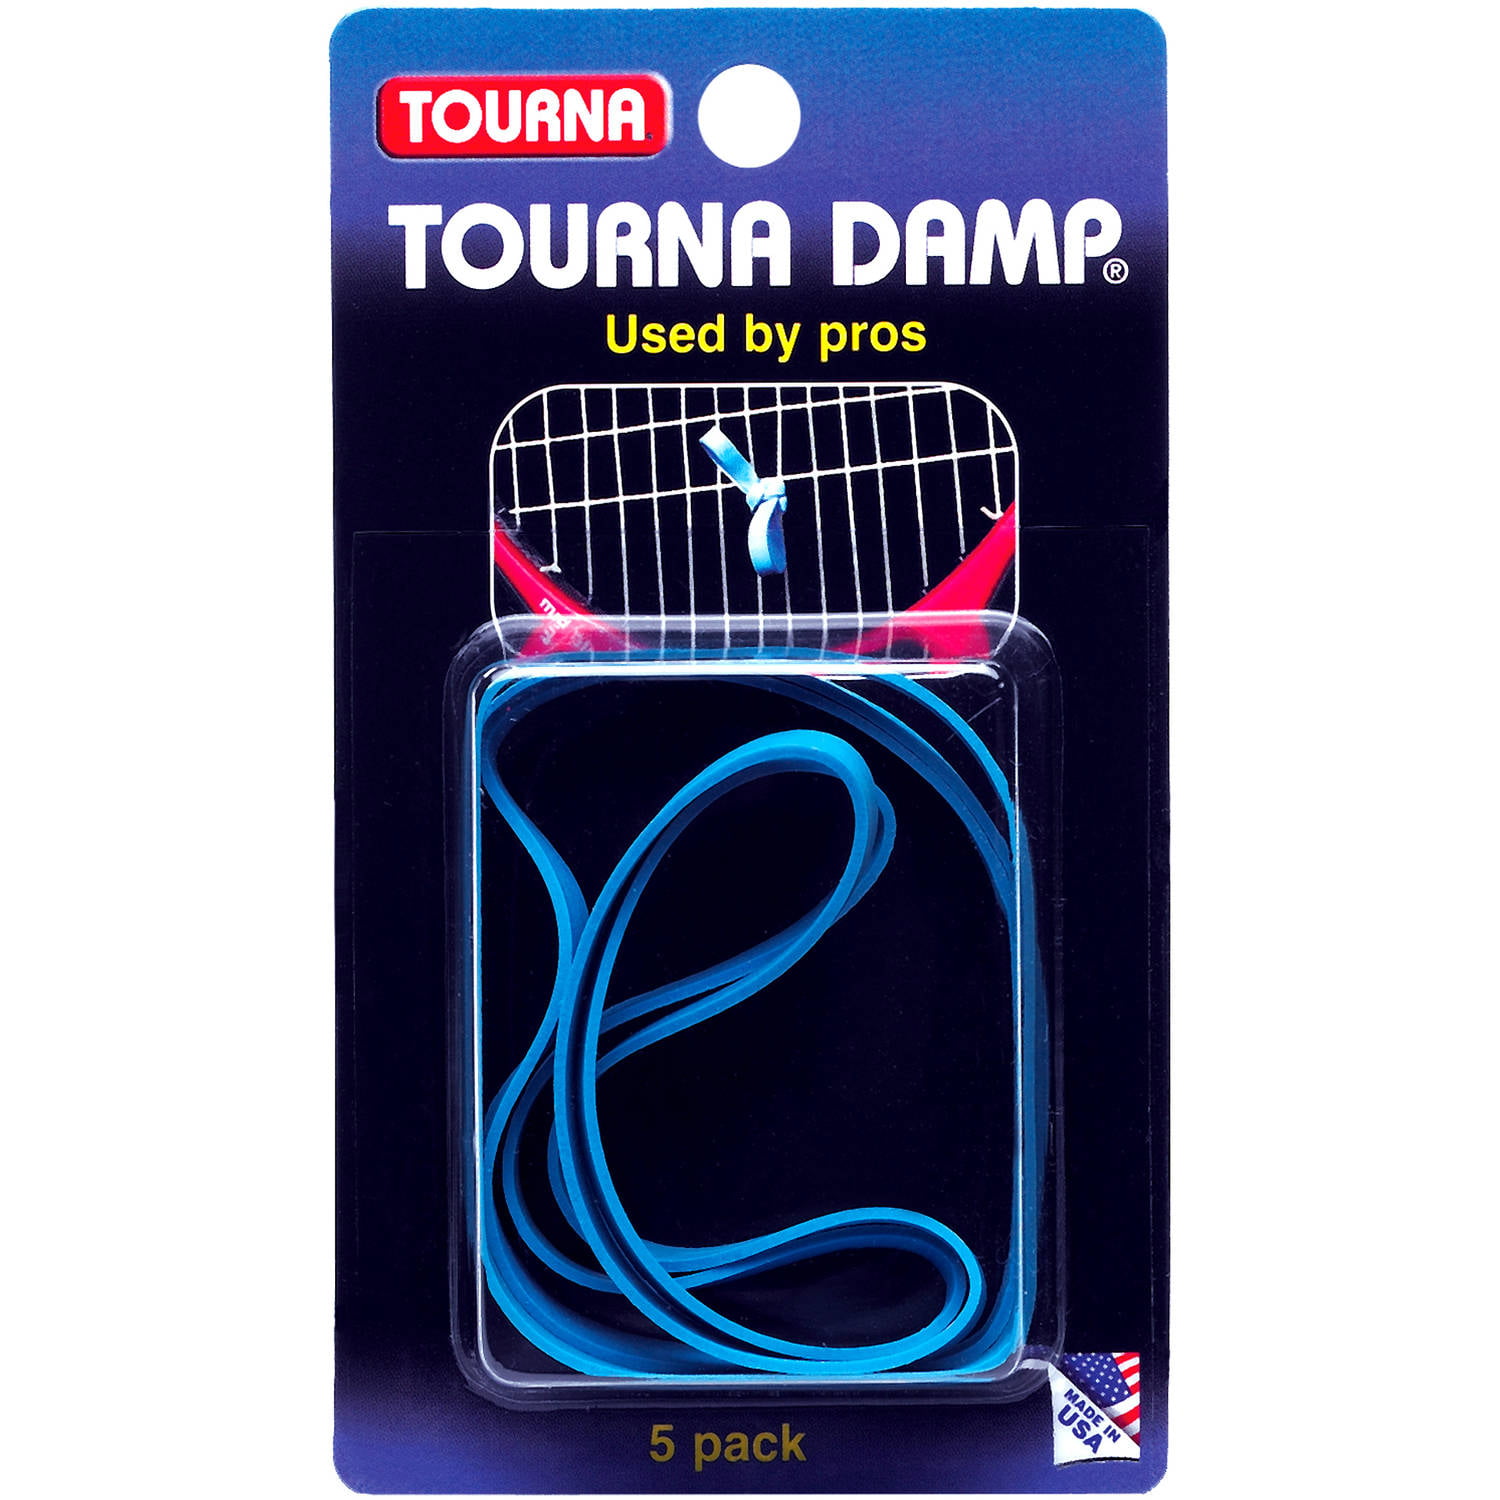 Unique Tourna Racket Accessories Damp X 5 DAMPENER PER PACK ANTI-VIBRATION STOP 